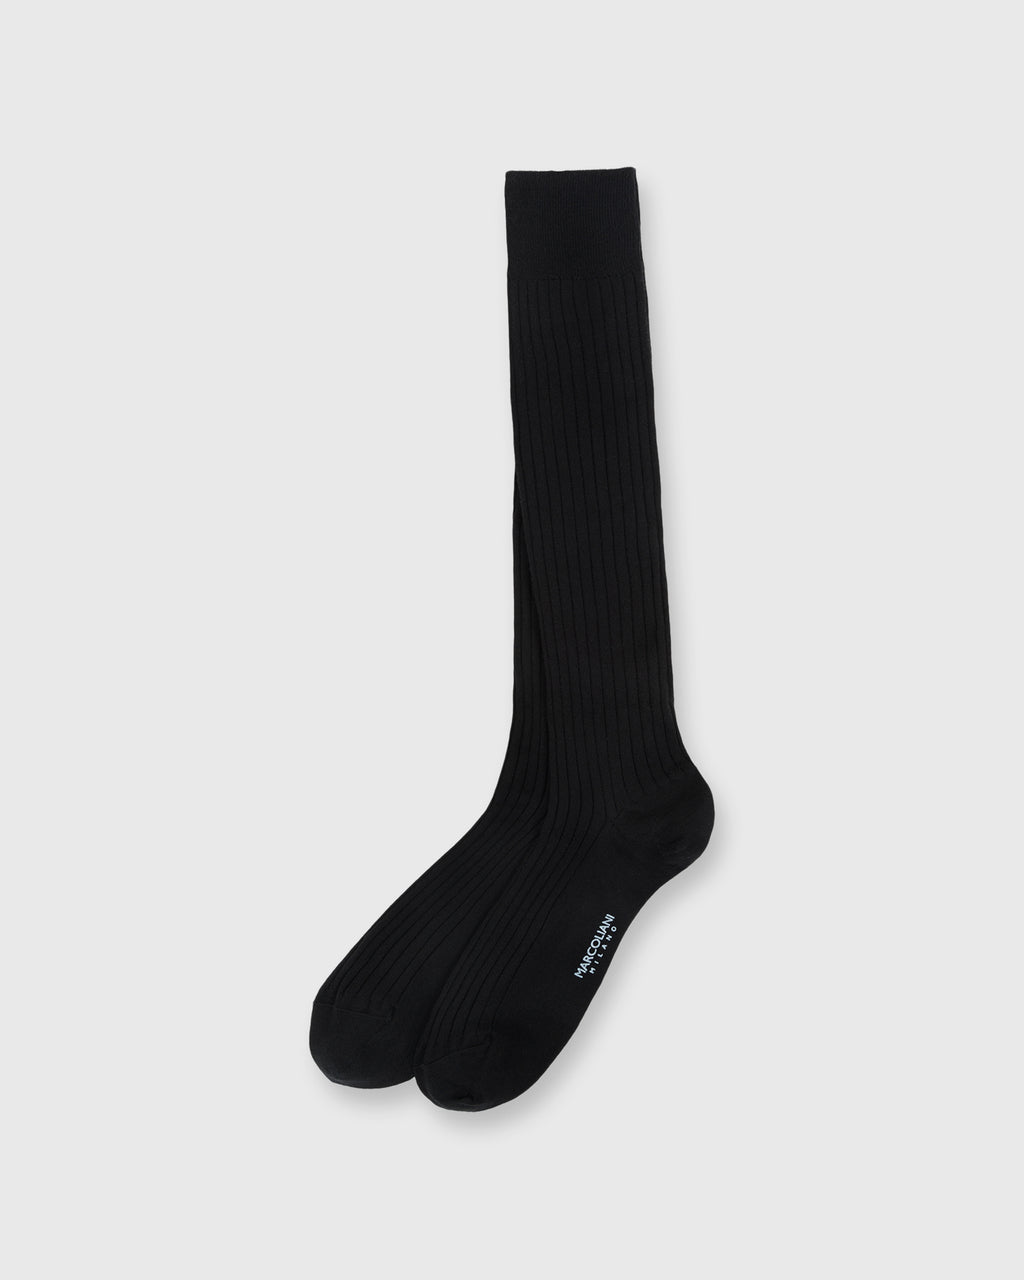 Over-The-Calf Dress Socks Black Extra Fine Merino